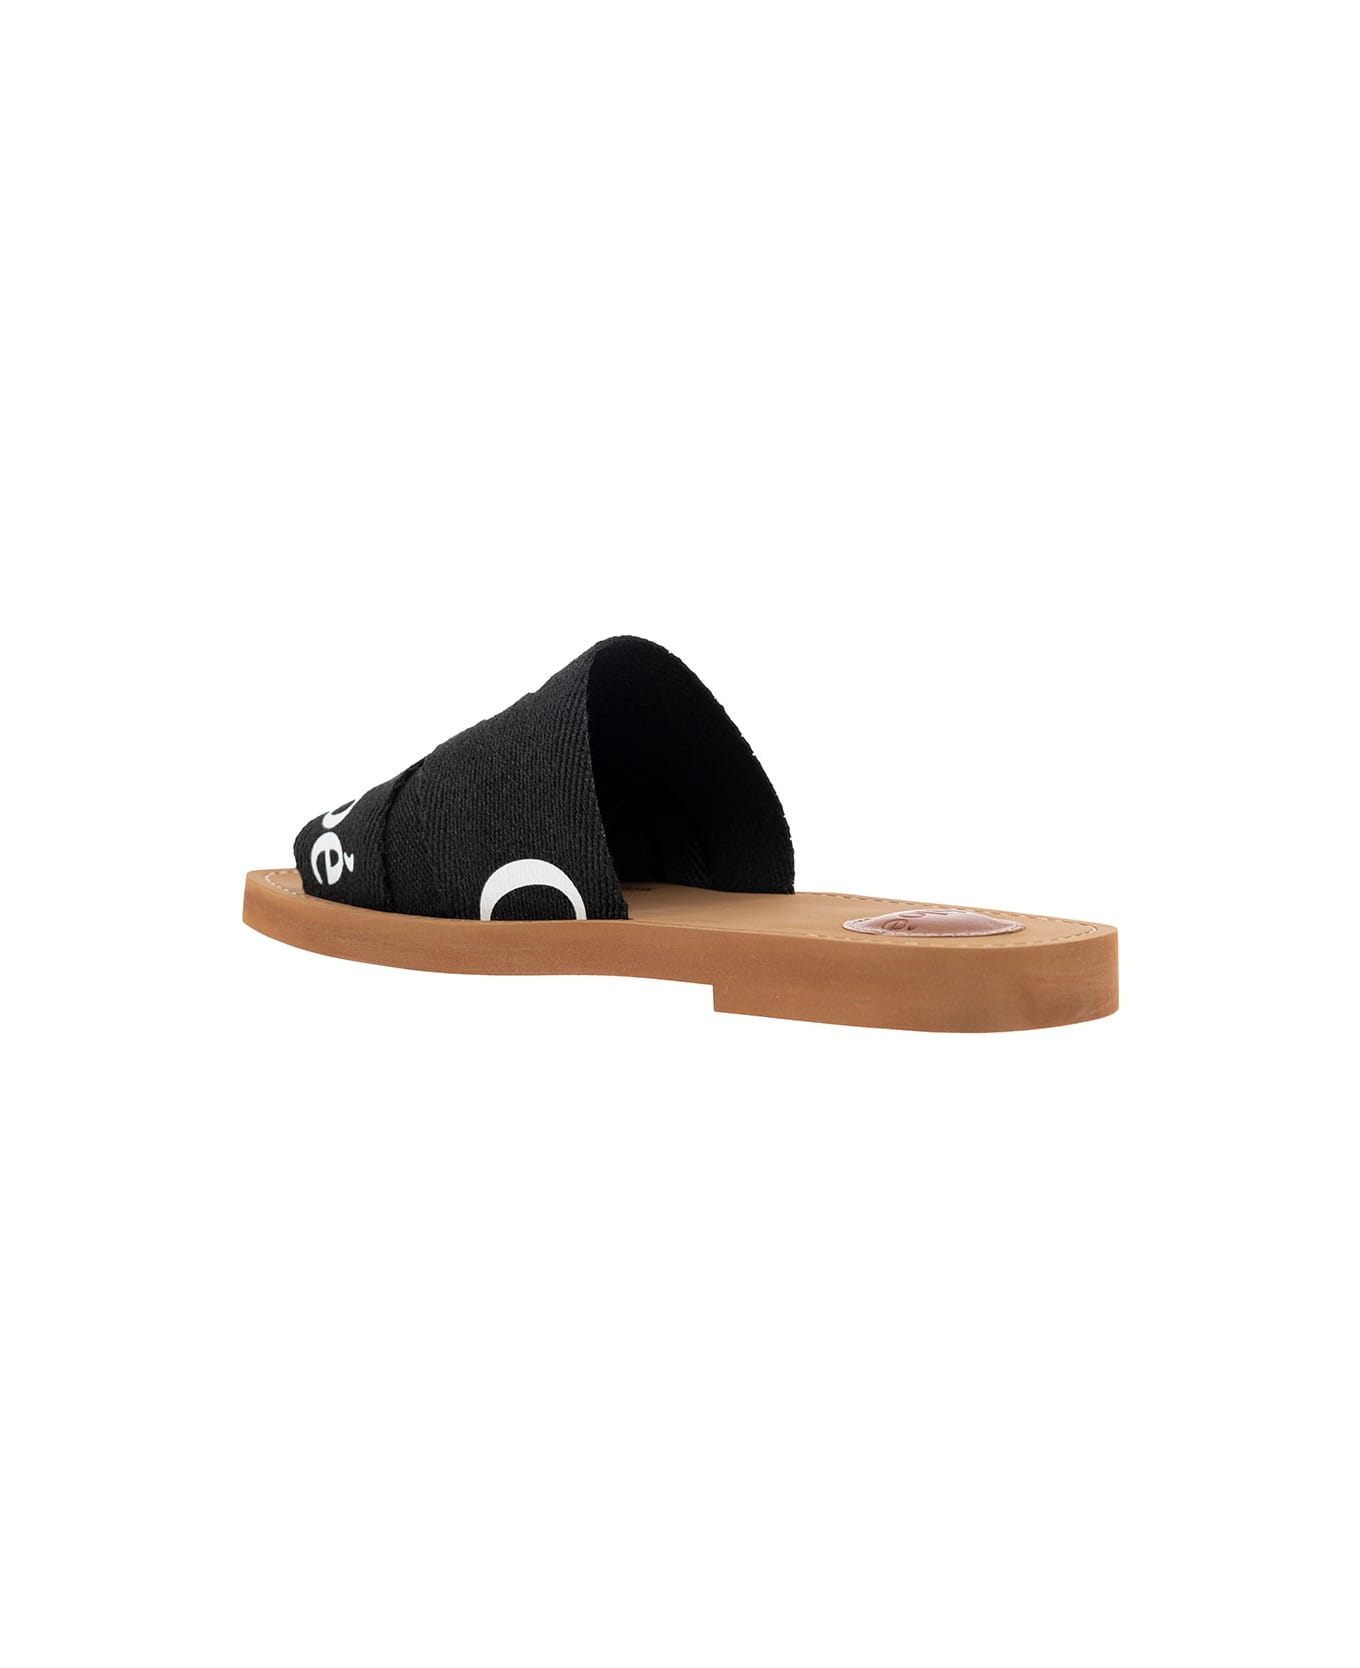 Chloé Woman's Black Canvas Sandals With Logo - Black